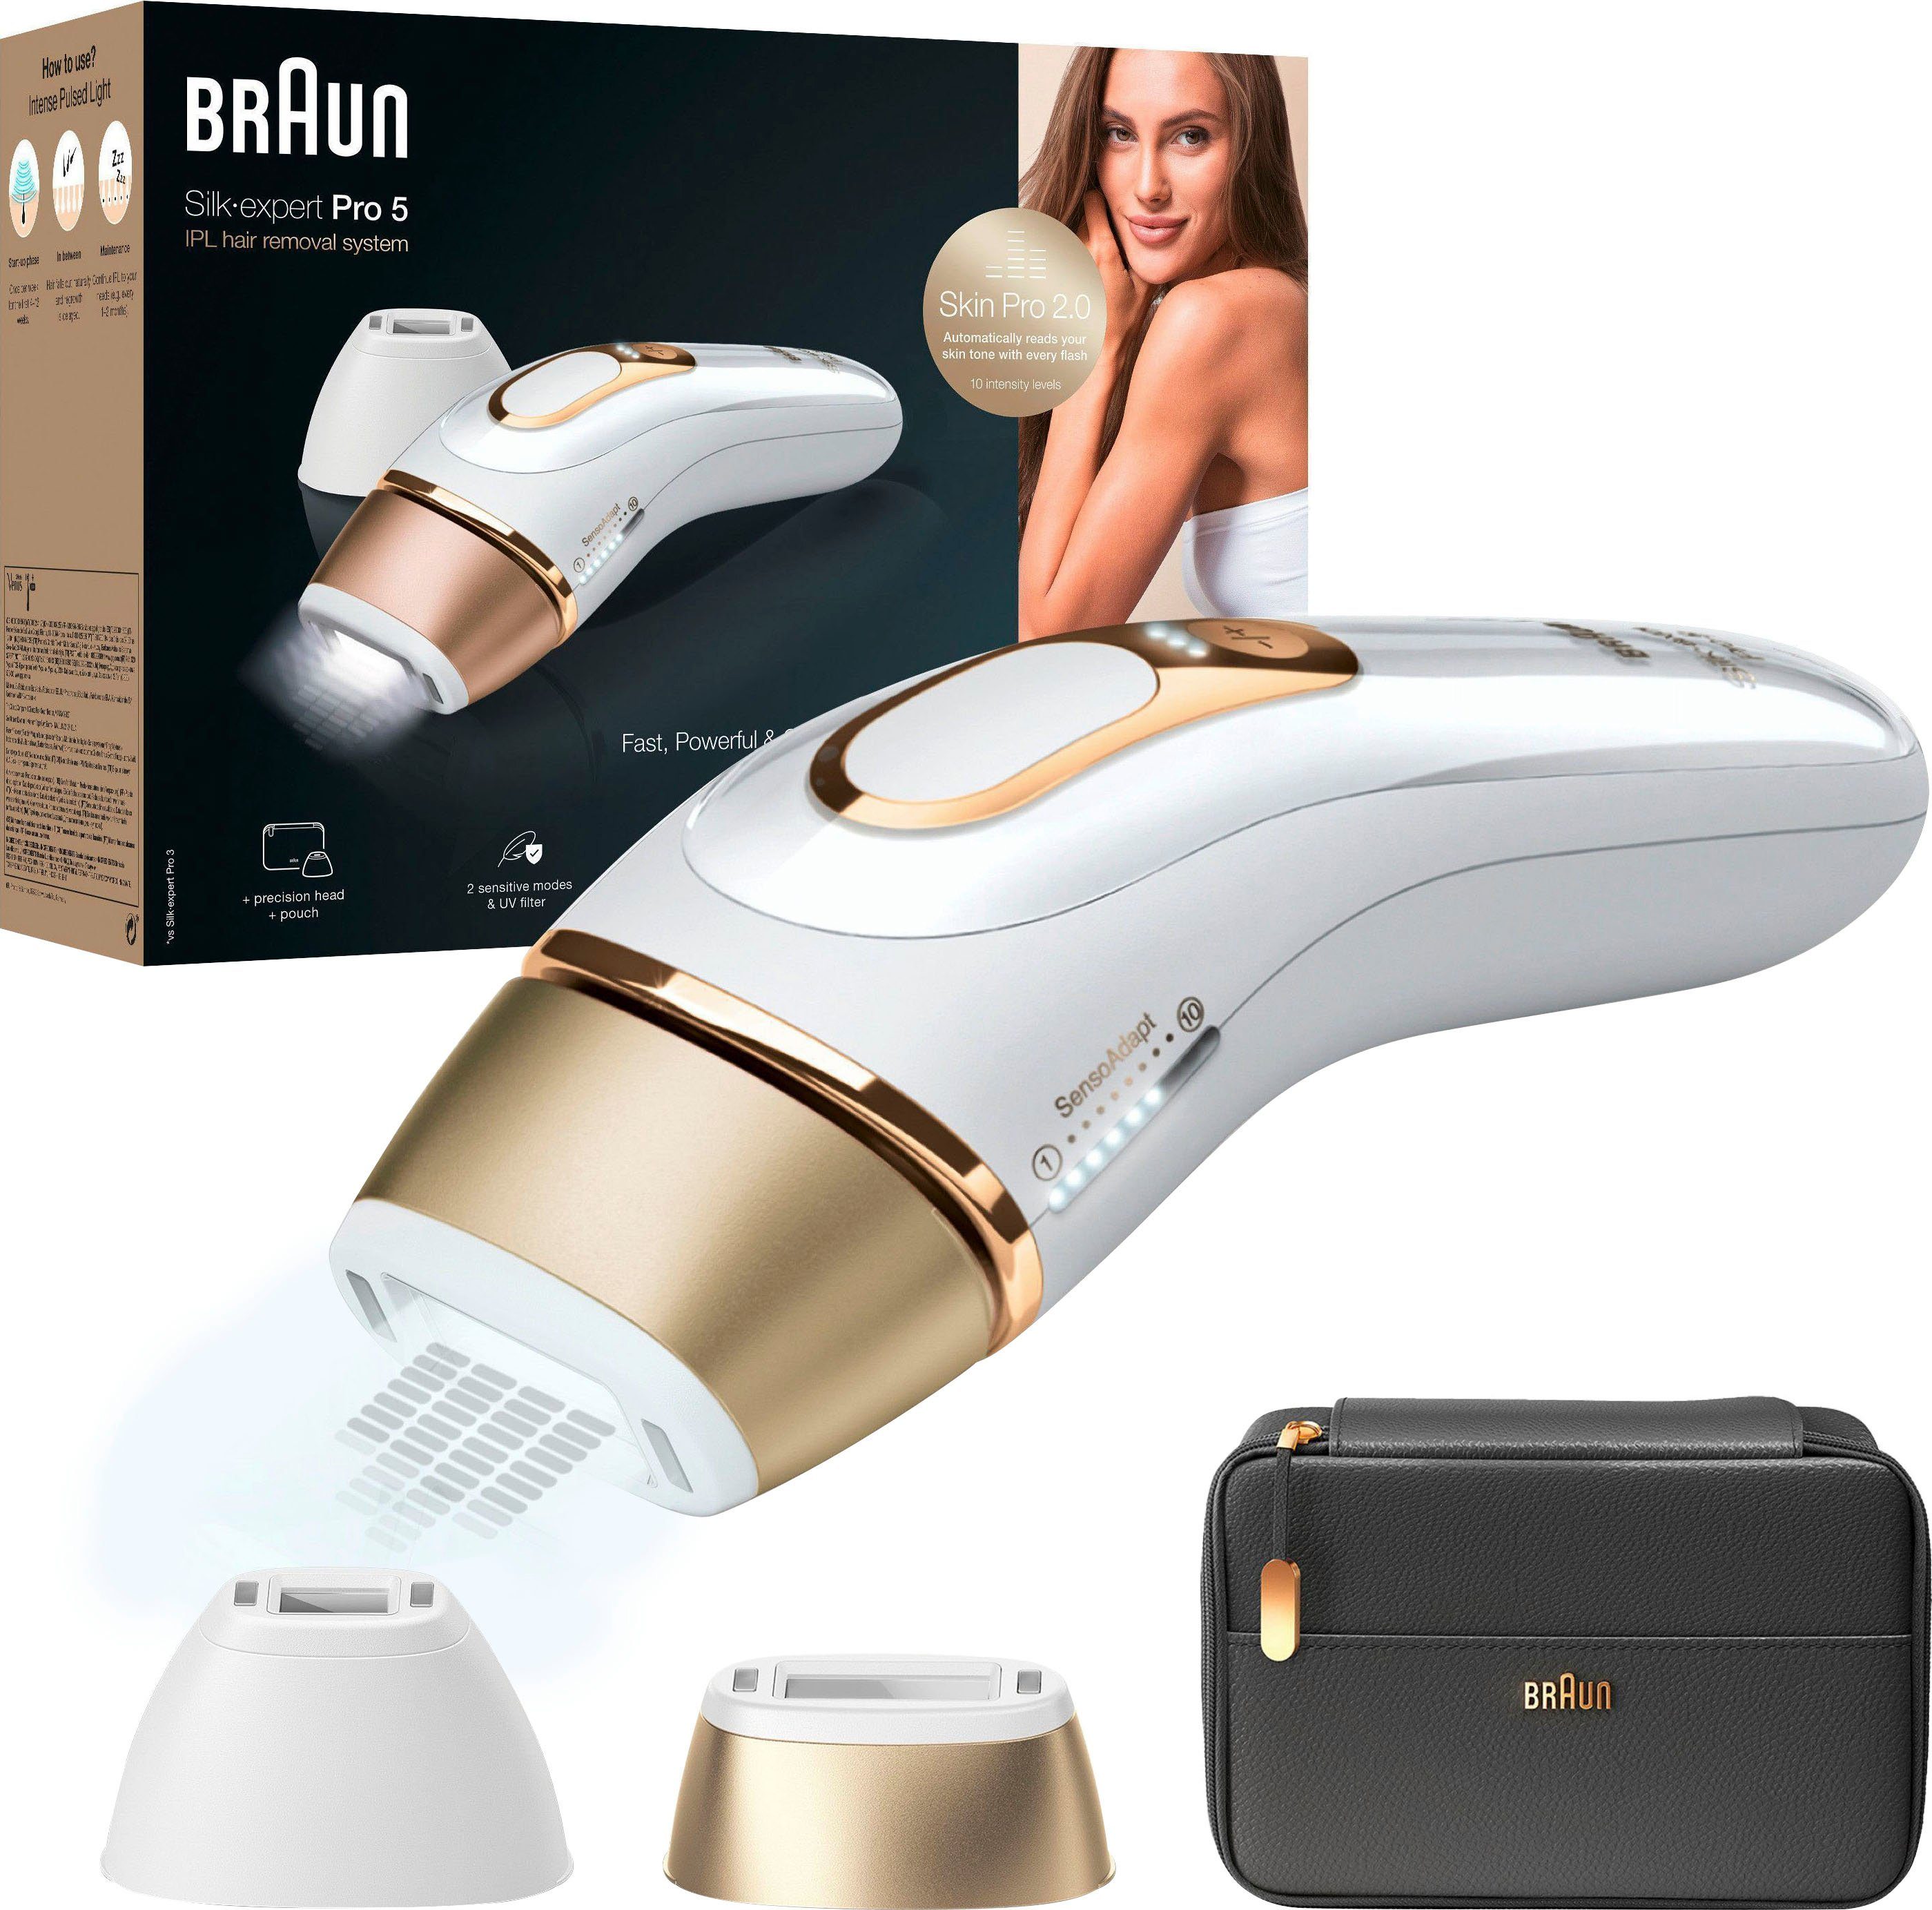 Braun IPL-Haarentferner Silk-expert Pro IPL PL5140, 400.000 Lichtimpulse, Skin Pro 2.0 Sensor